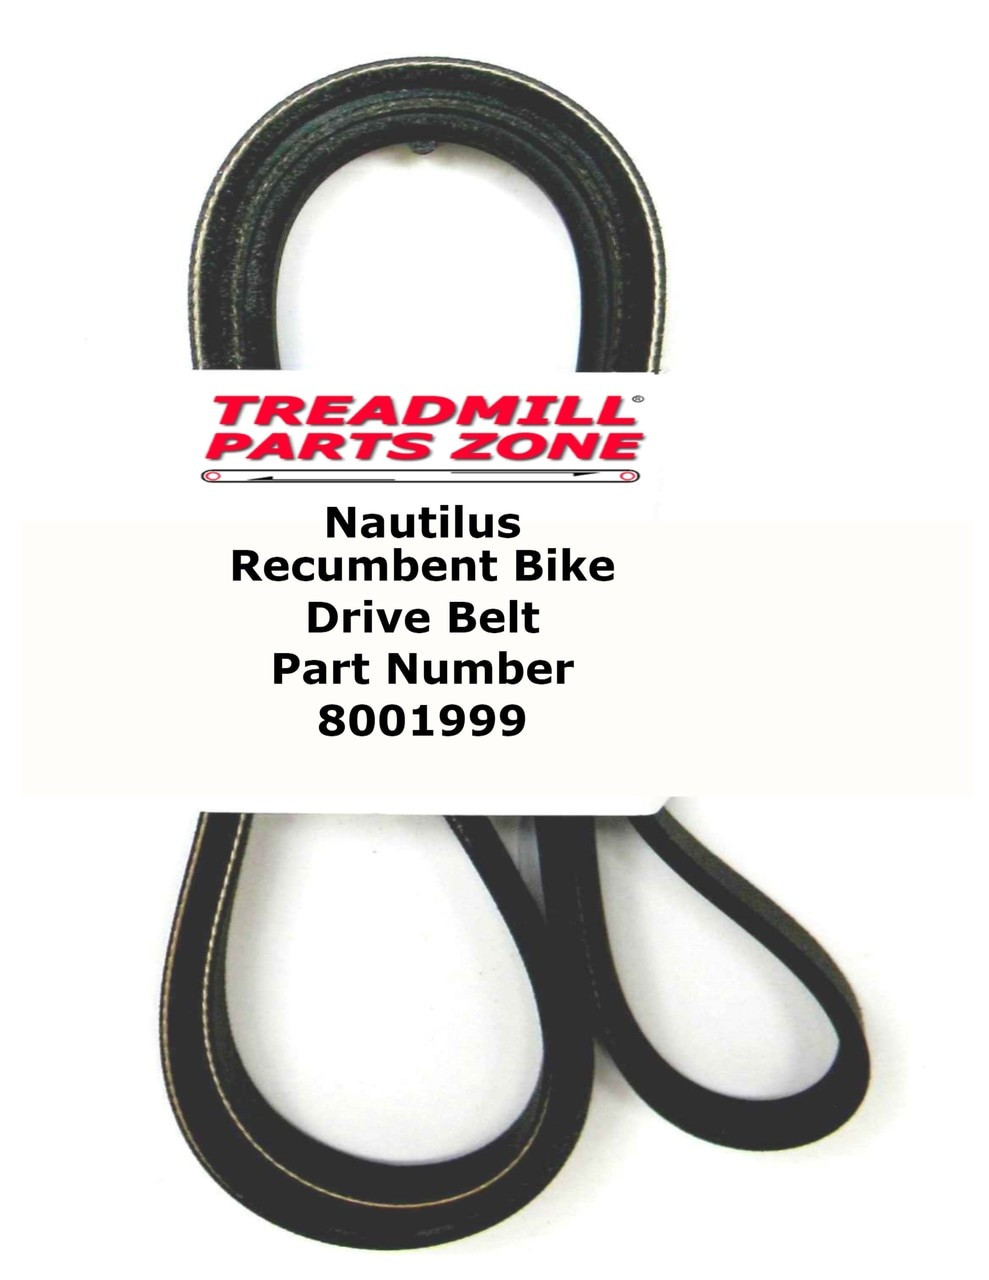 Nautilus Recumbent Bike Model R616 Drive Belt Part Number 8001999